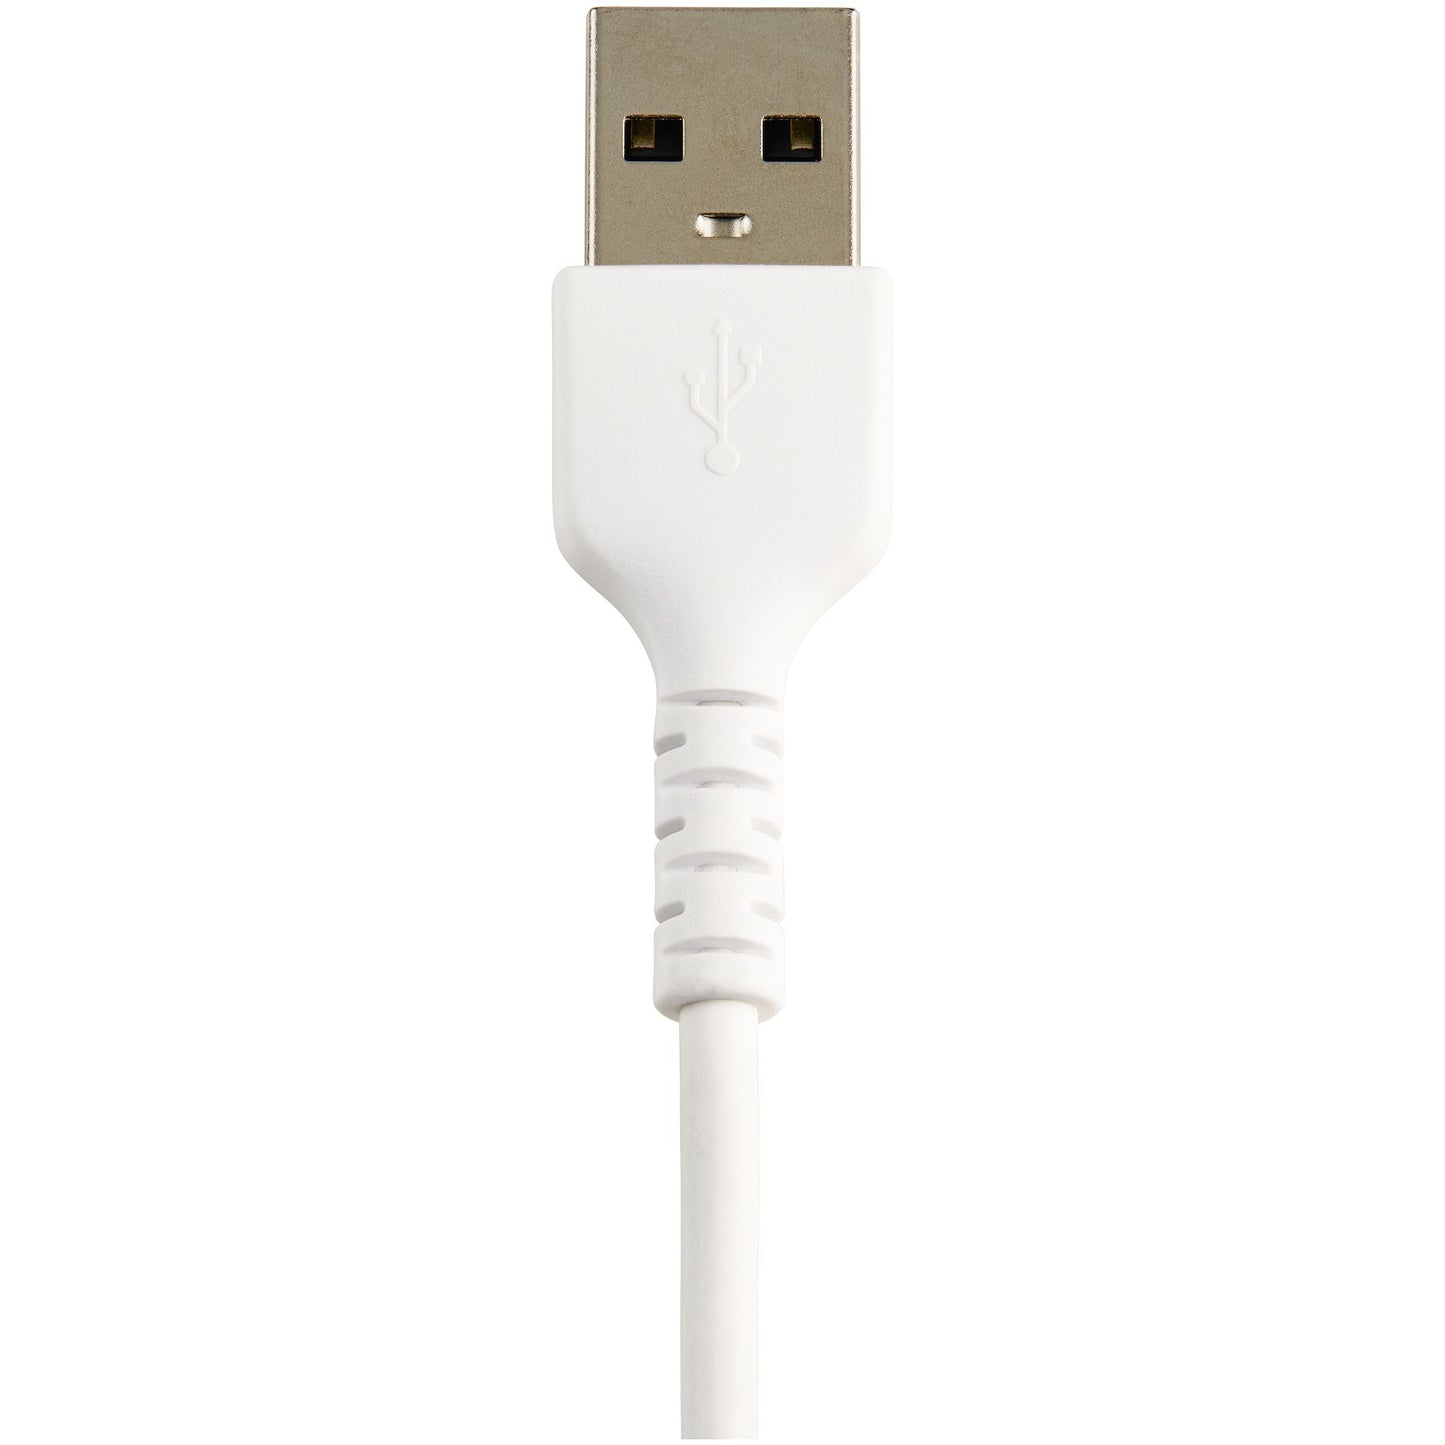 Cable de Carga Certificado Startech.com RUSBLTMM15CMW, MFi Lightning Macho - USB A 2.0 Macho, 15cm, Blanco, para para iPod/iPhone/iPad